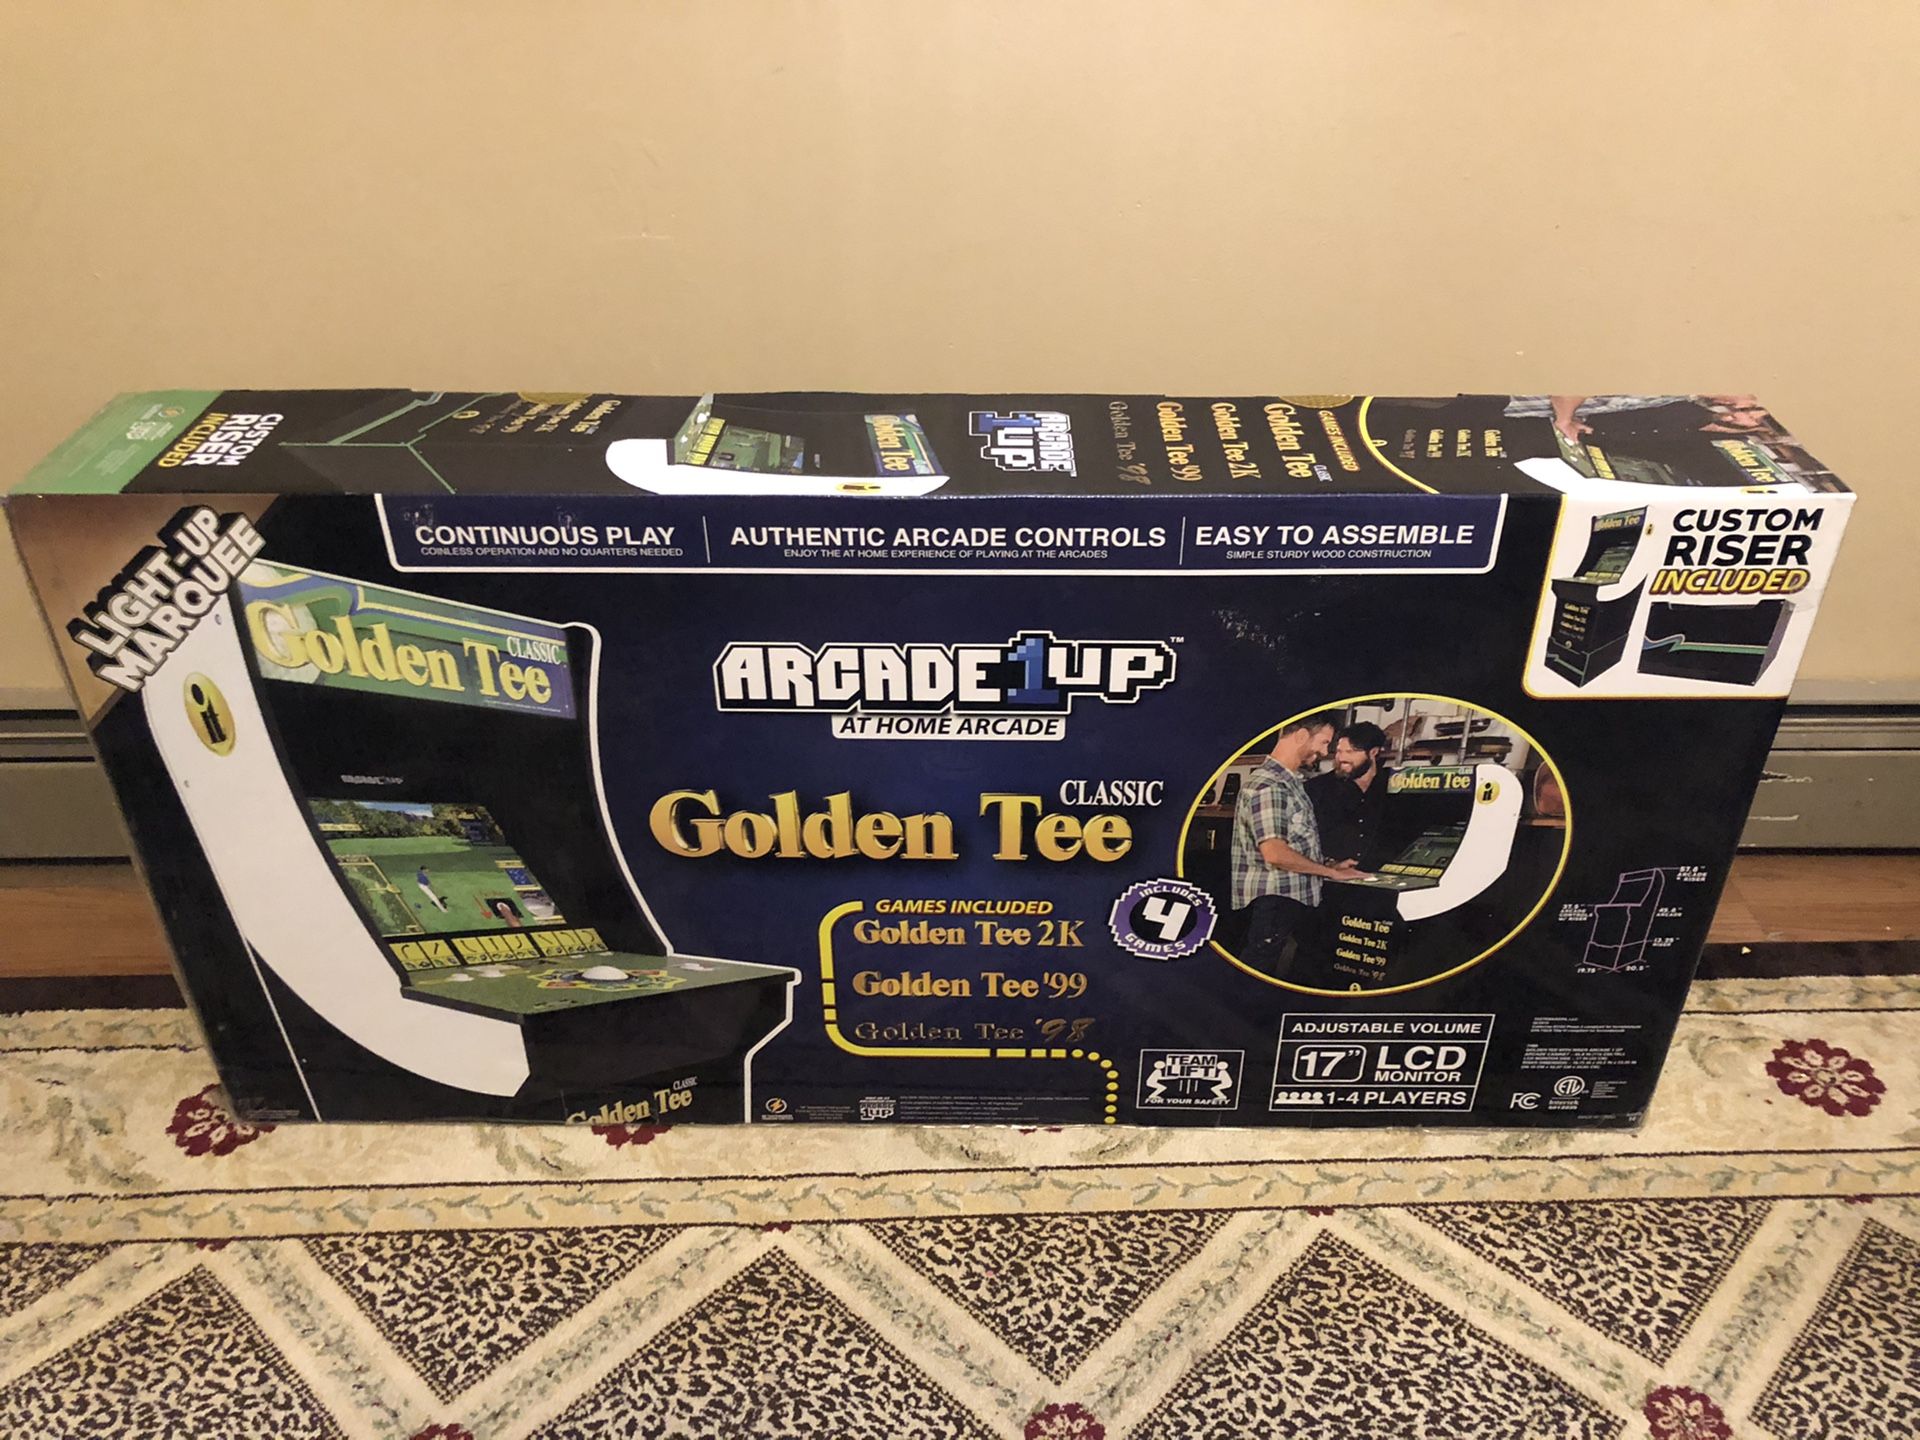 arcade1 up Golden tee